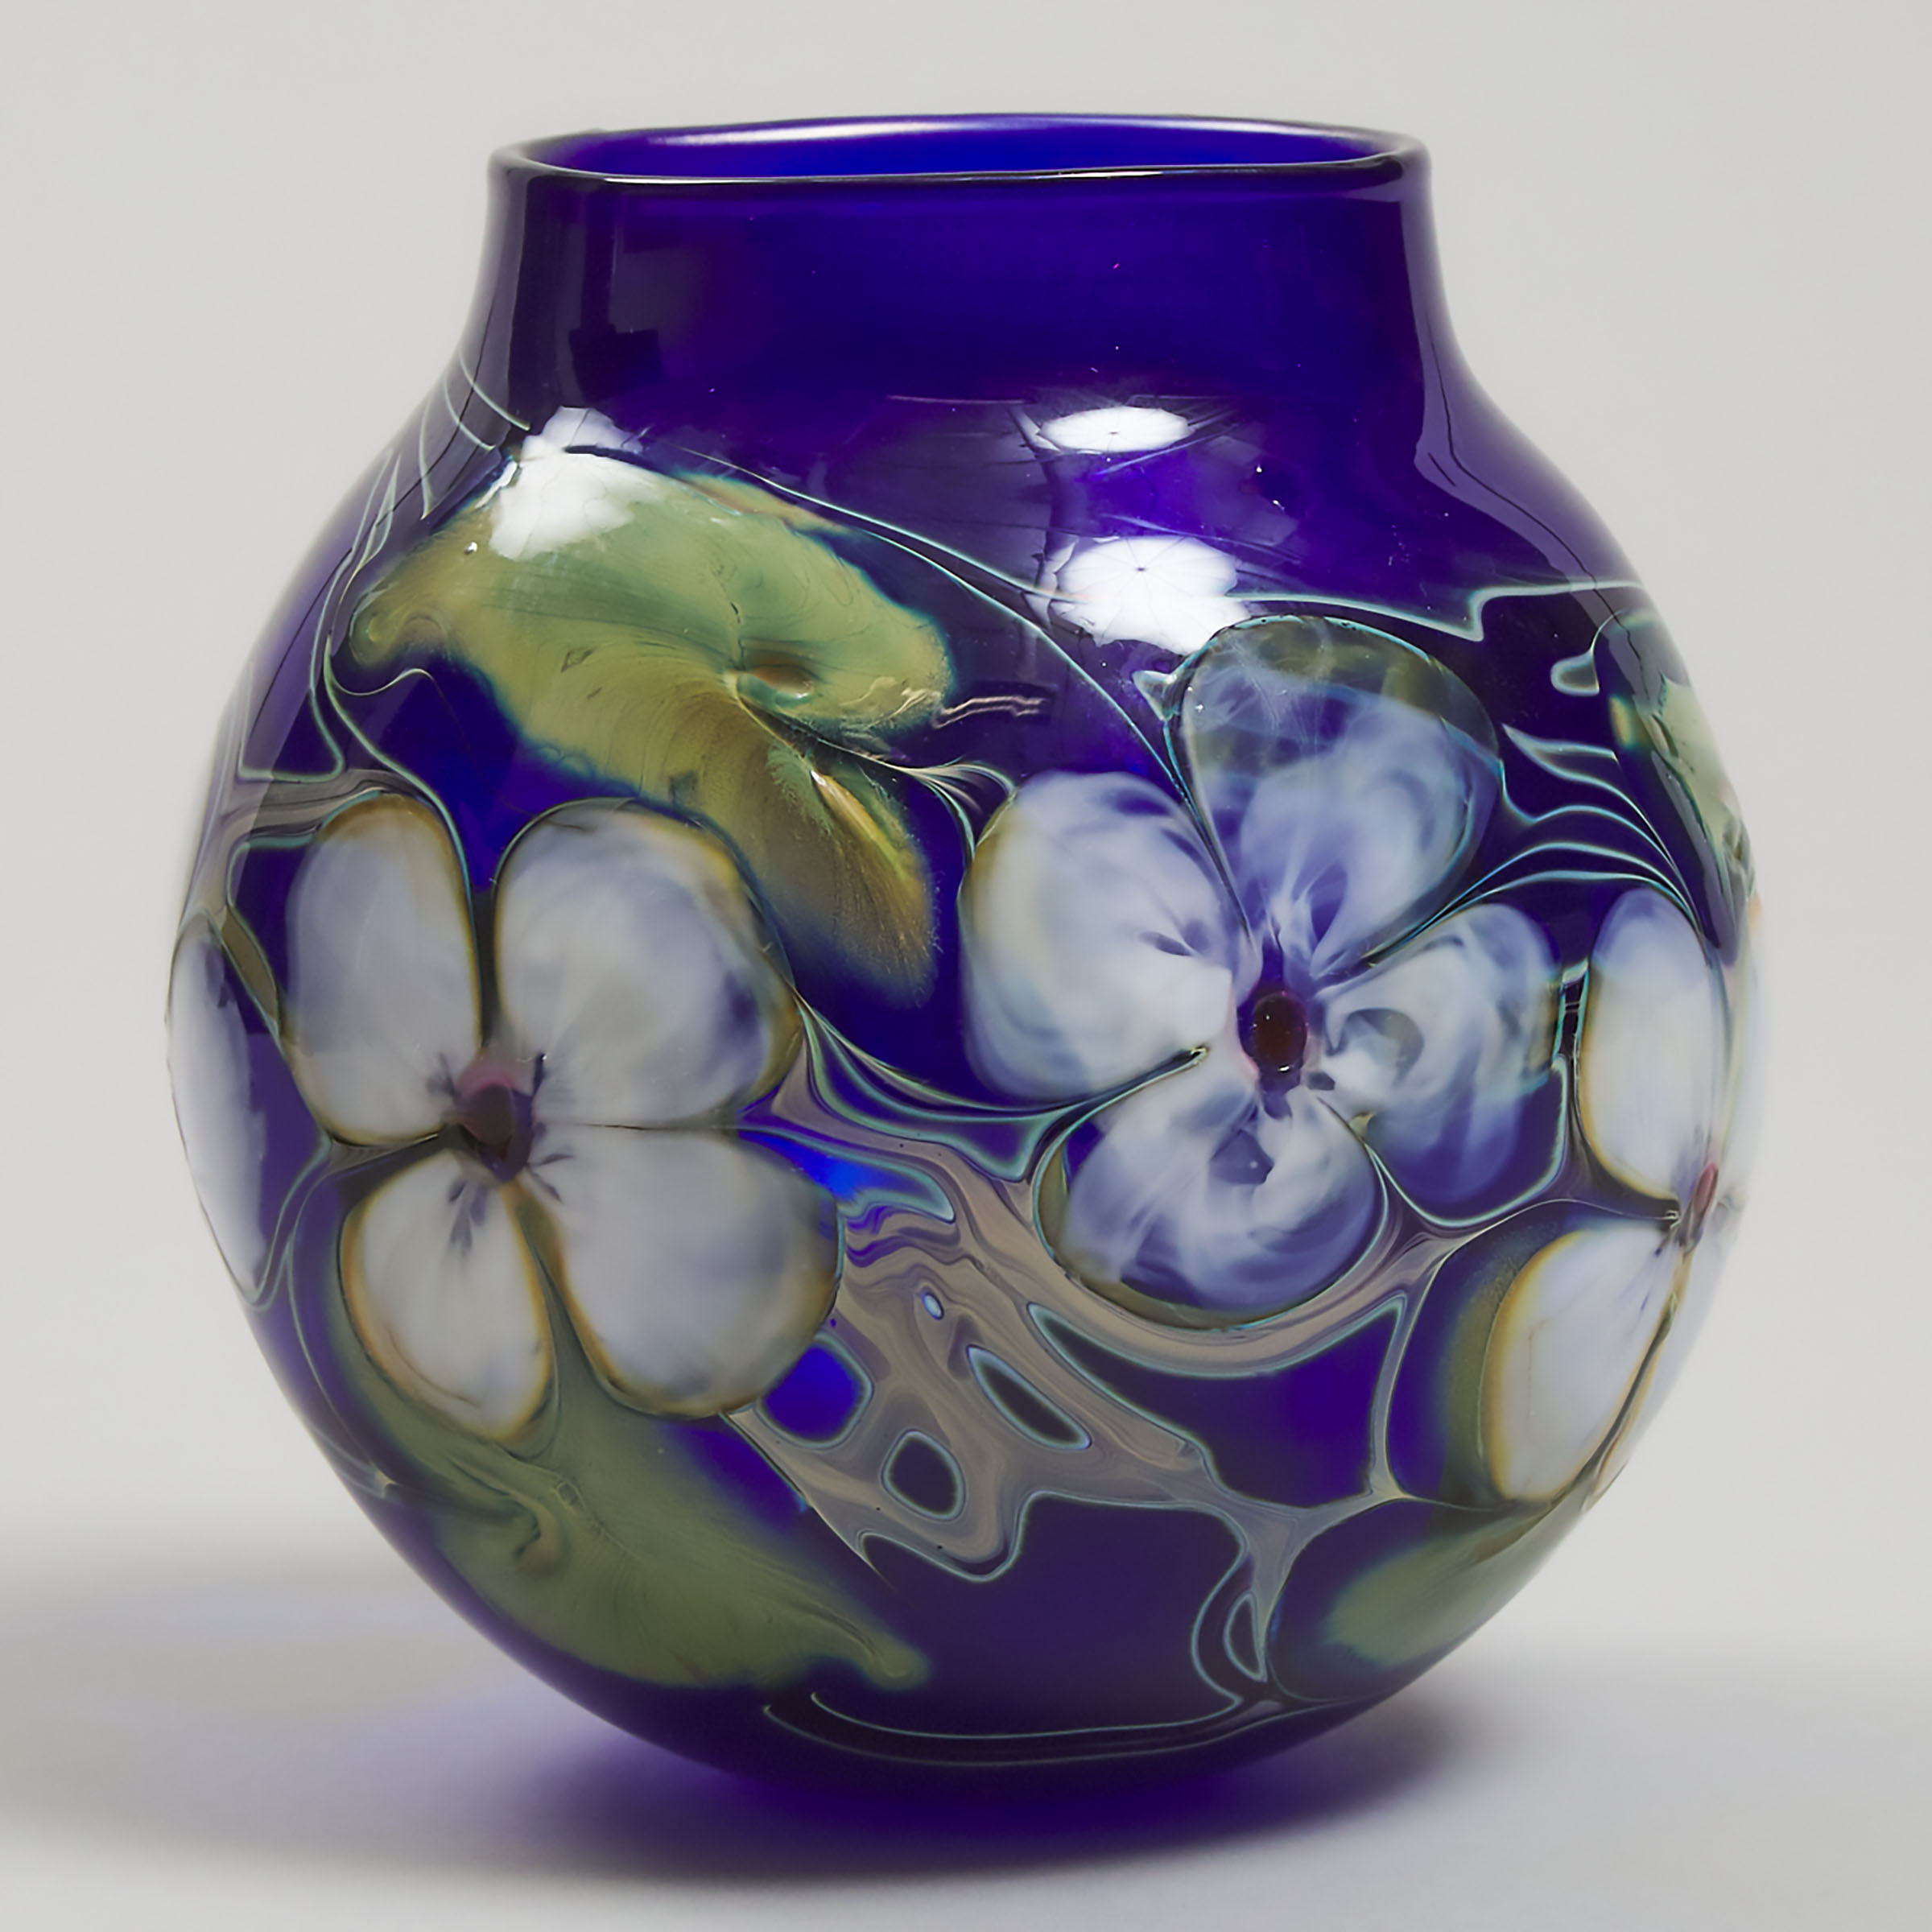 Charles Lotton (American, b.1935), Blue 'Multi-Flora' Glass Vase, 1981